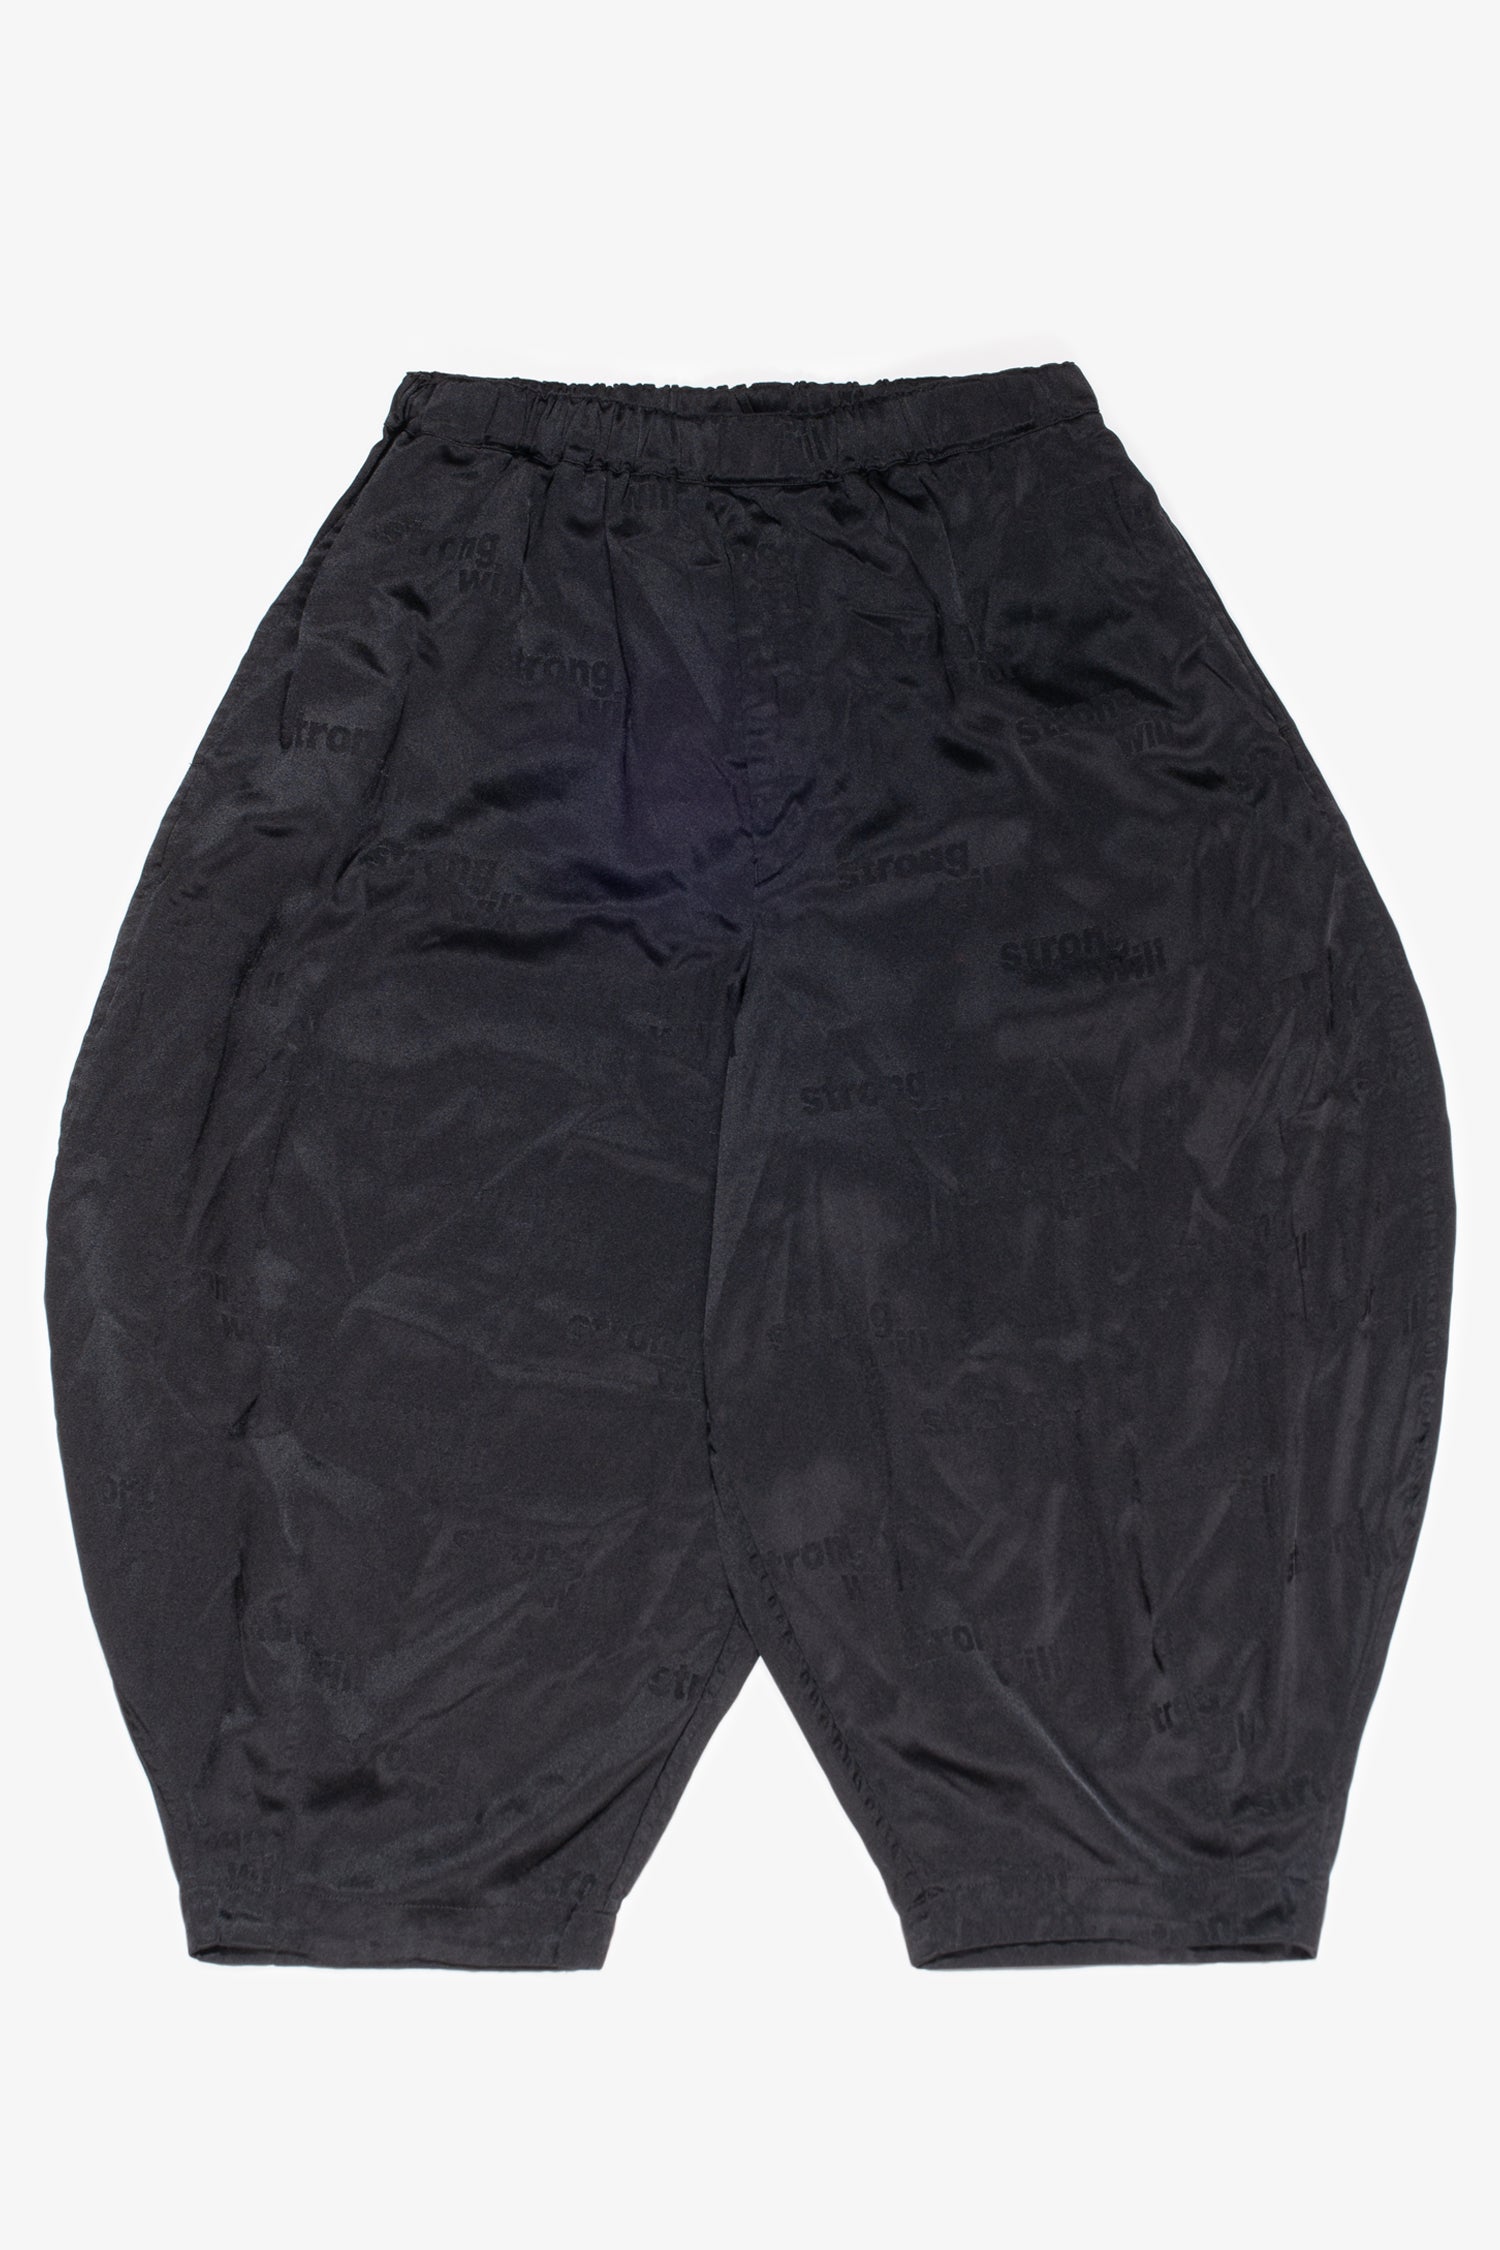 Selectshop FRAME - COMME DES GARCONS BLACK Cropped Balloon Leg Trousers Bottoms Dubai